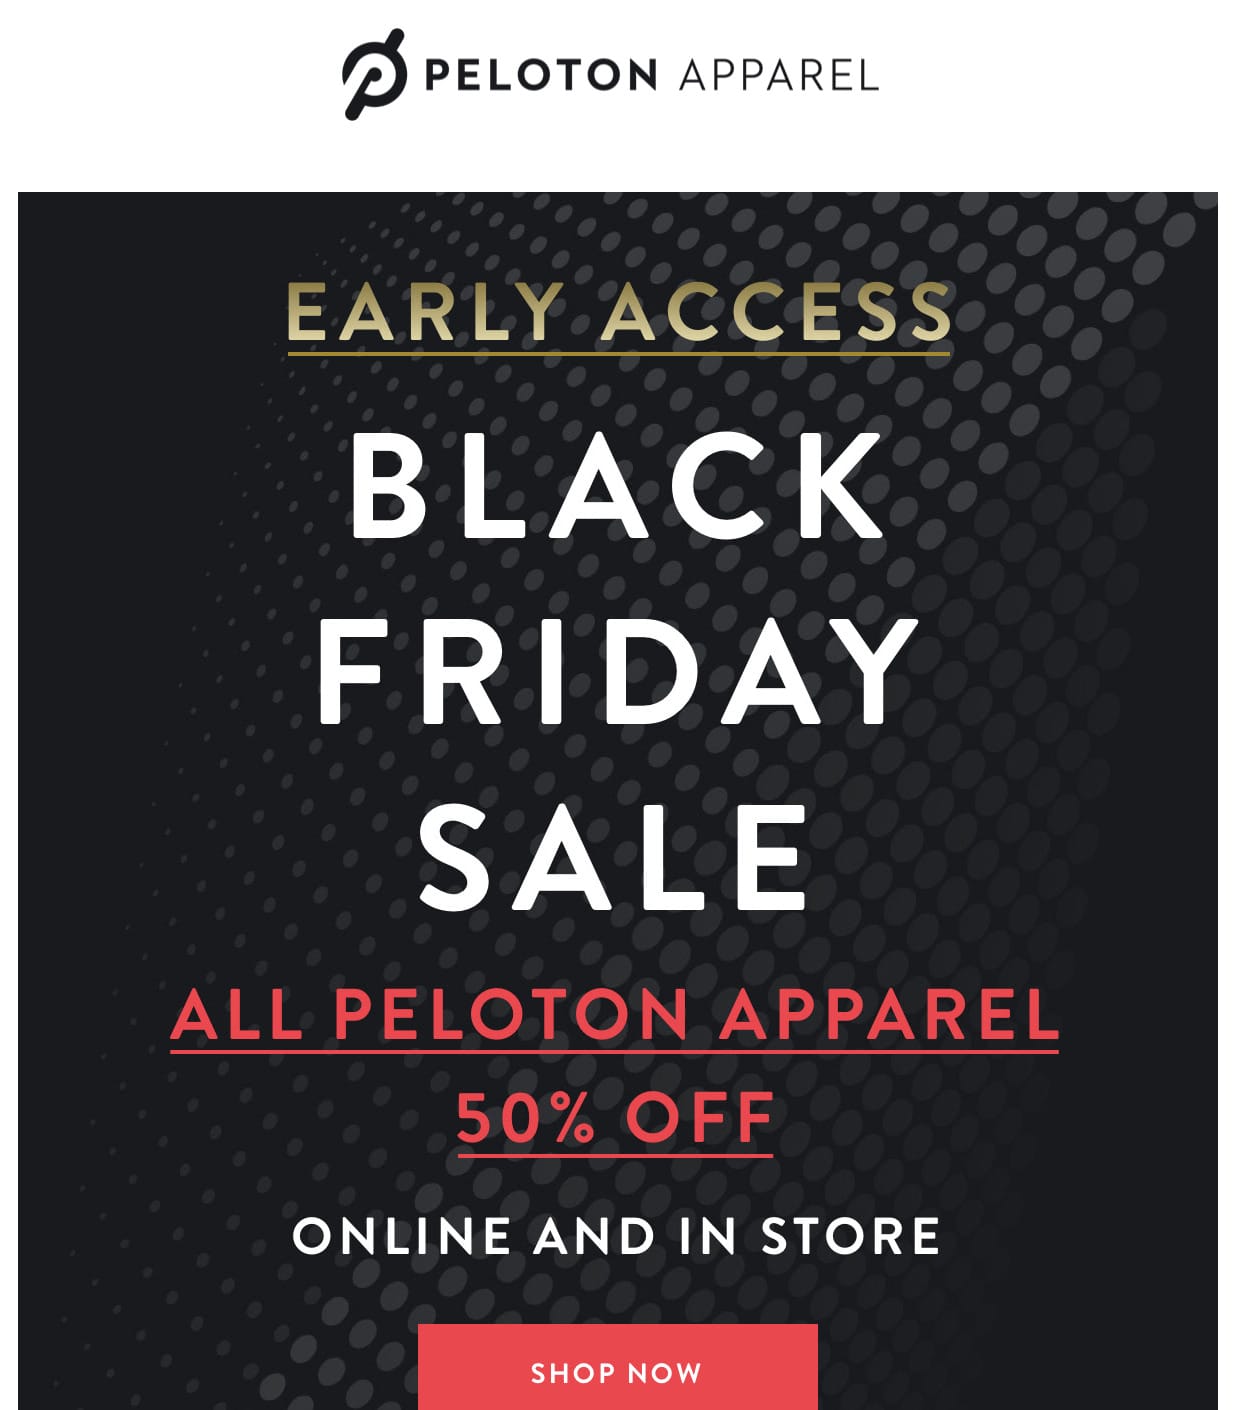 Black Friday & Cyber Monday Sale Continues - 50% All Peloton Apparel - Peloton Buddy